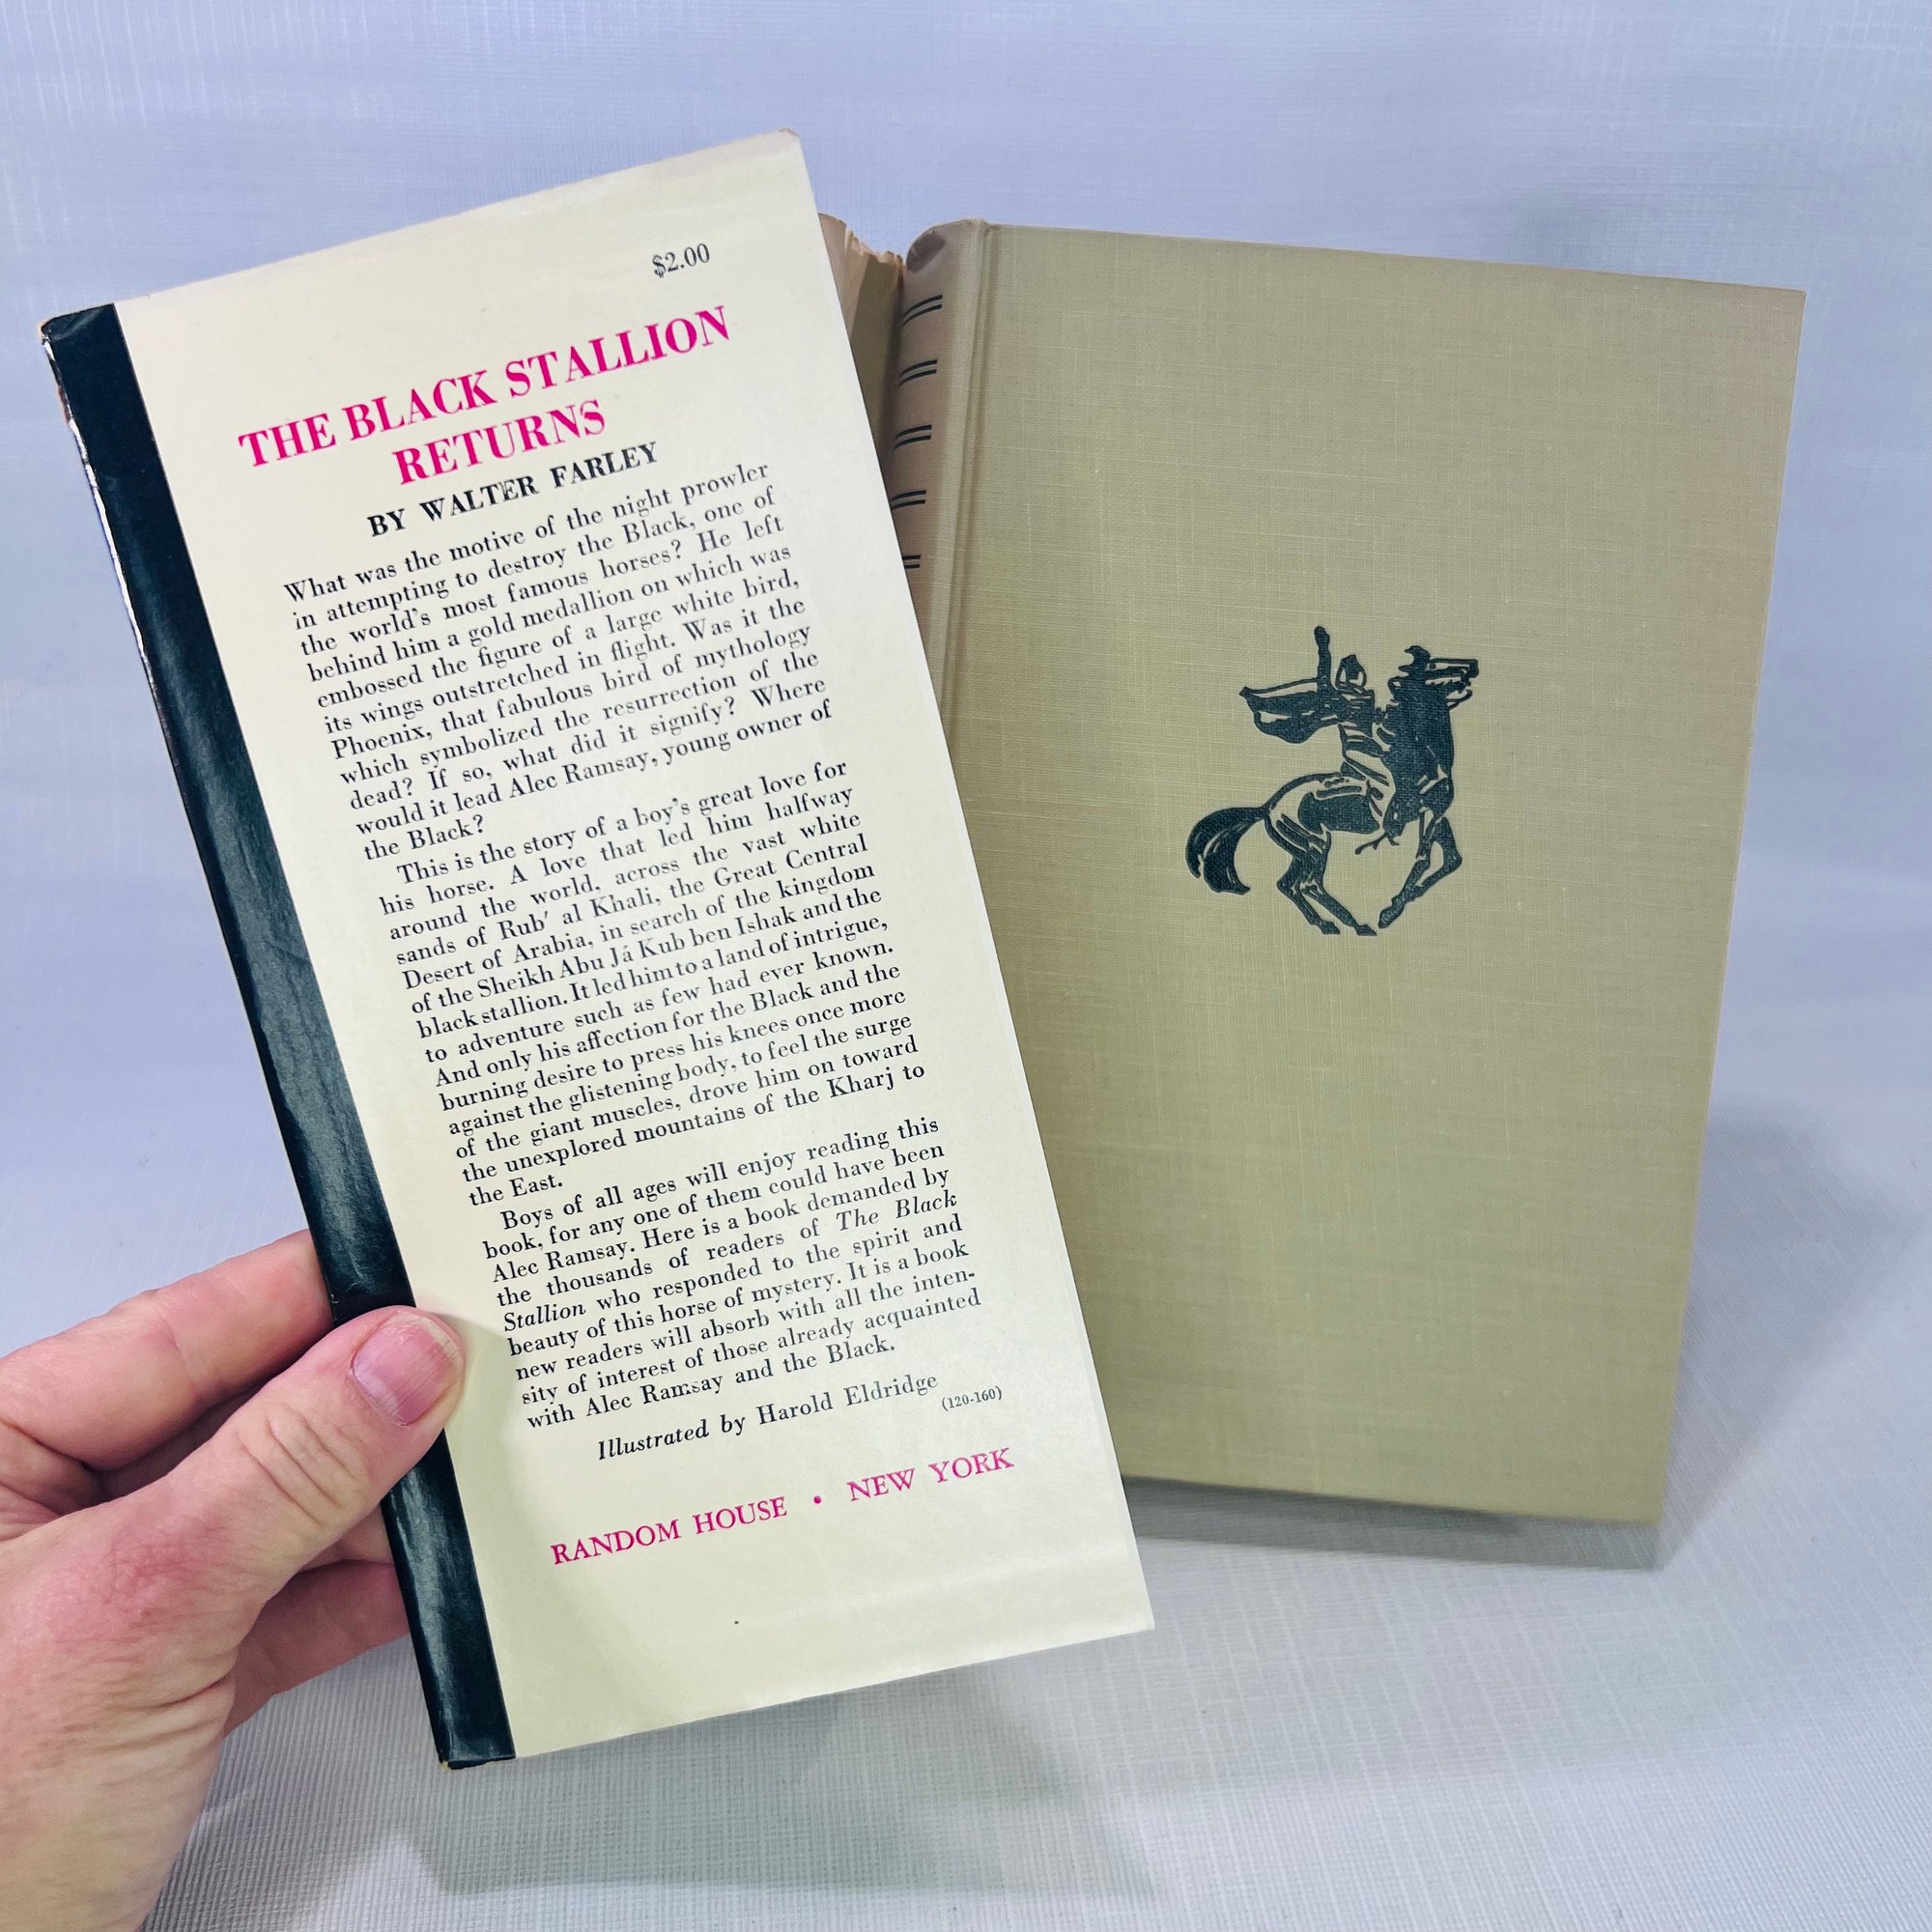 The Black Stallion Returns by Walter Farley Illustrated by Harold Eldridge 1954 Random House